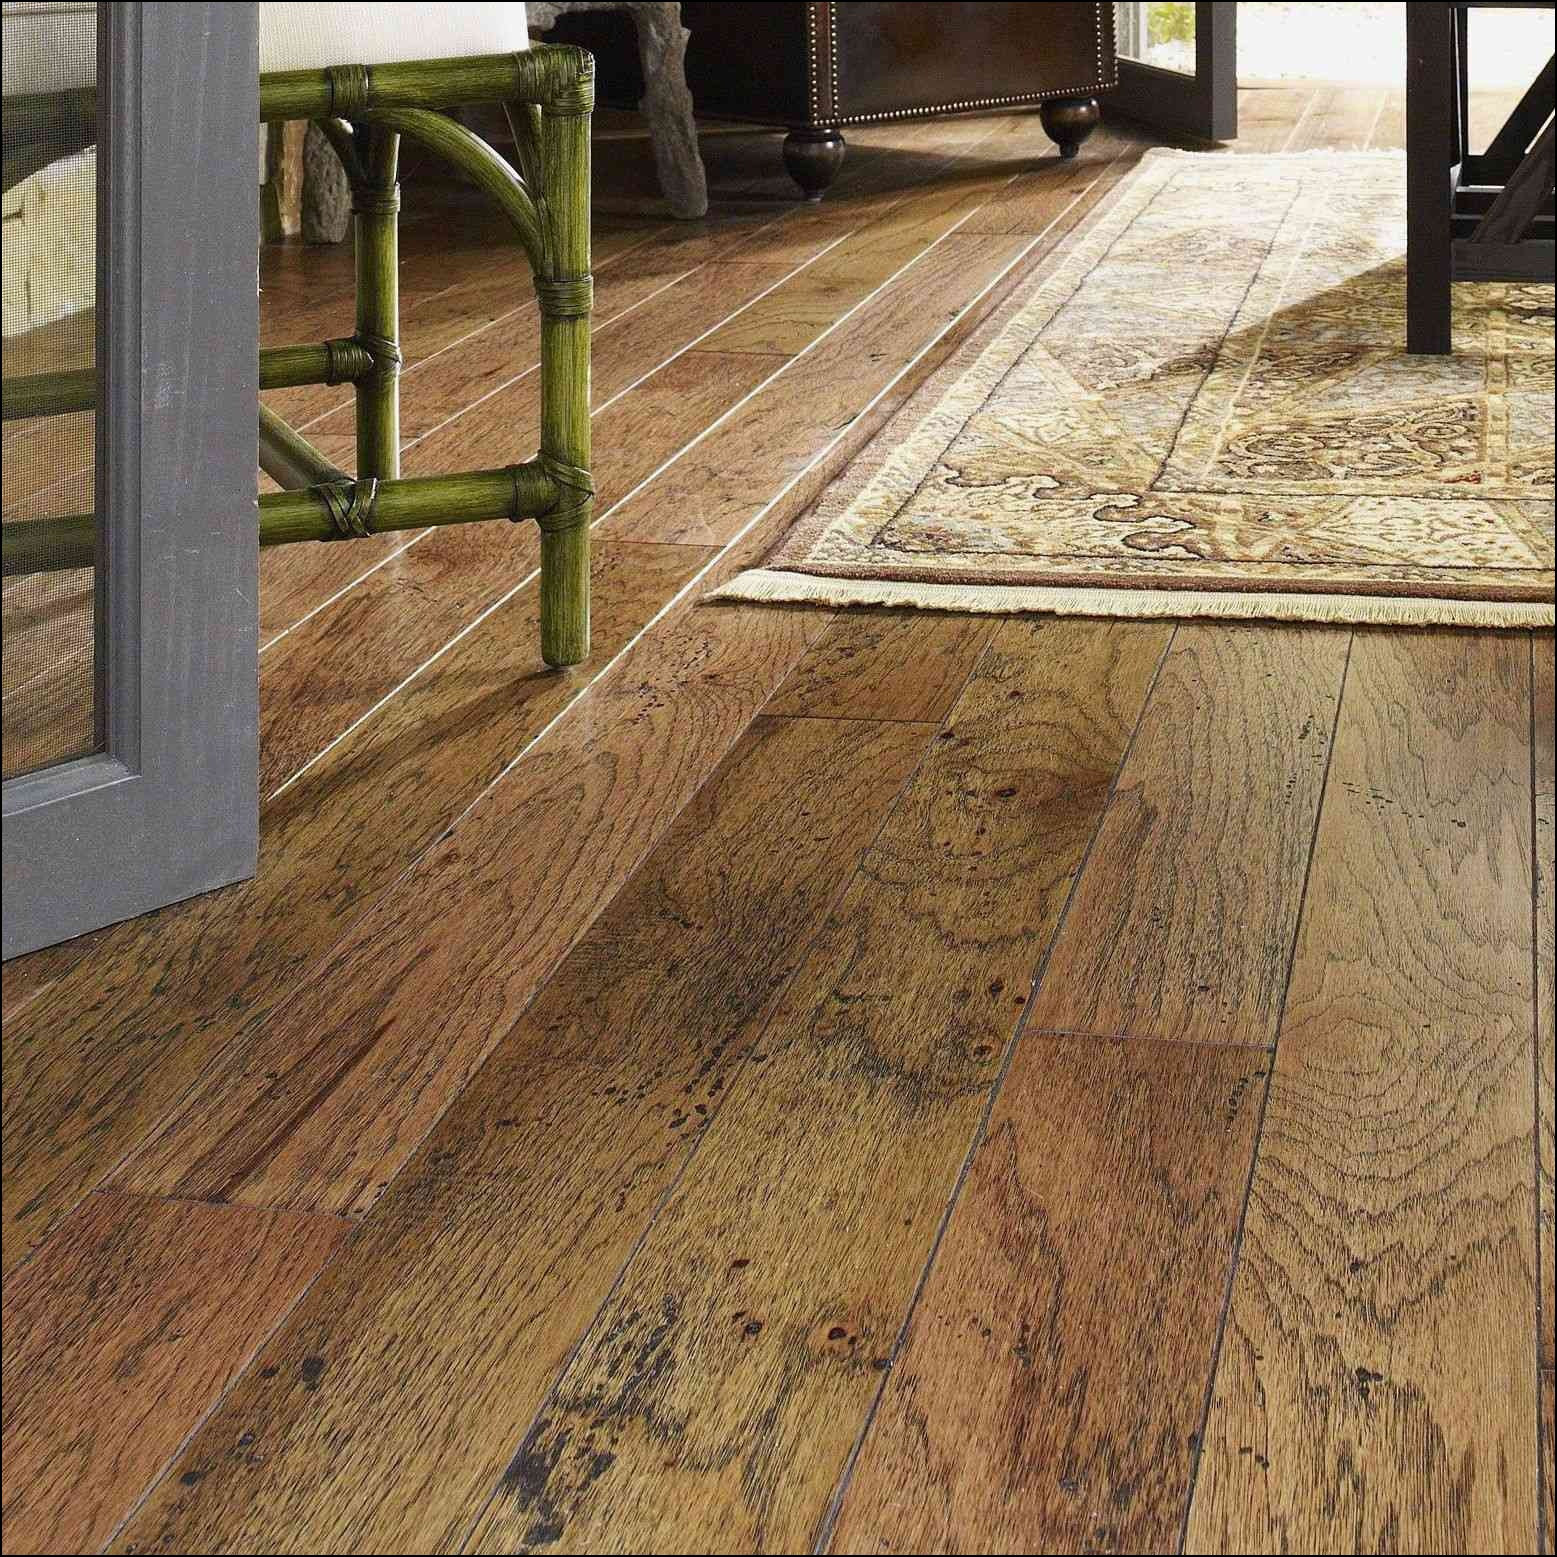 hardwood floor refinishing toronto of wide plank flooring ideas pertaining to wide plank dark wood flooring images best type wood flooring best floor floor wood floor wood